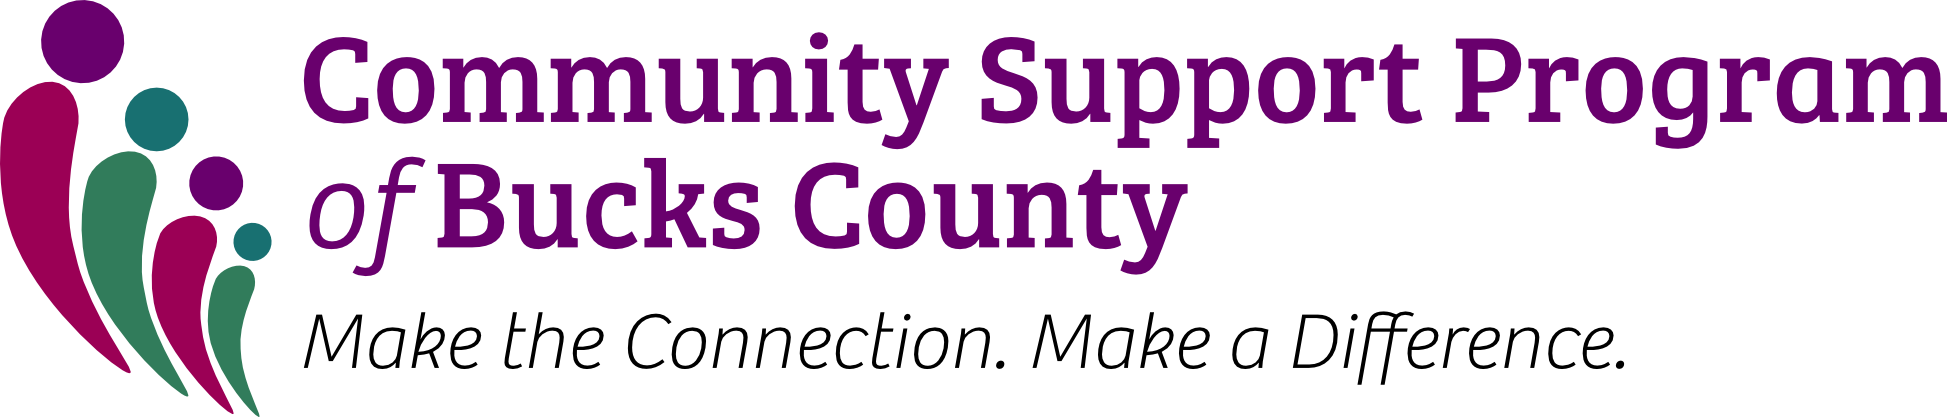 Community Support Program of Bucks County